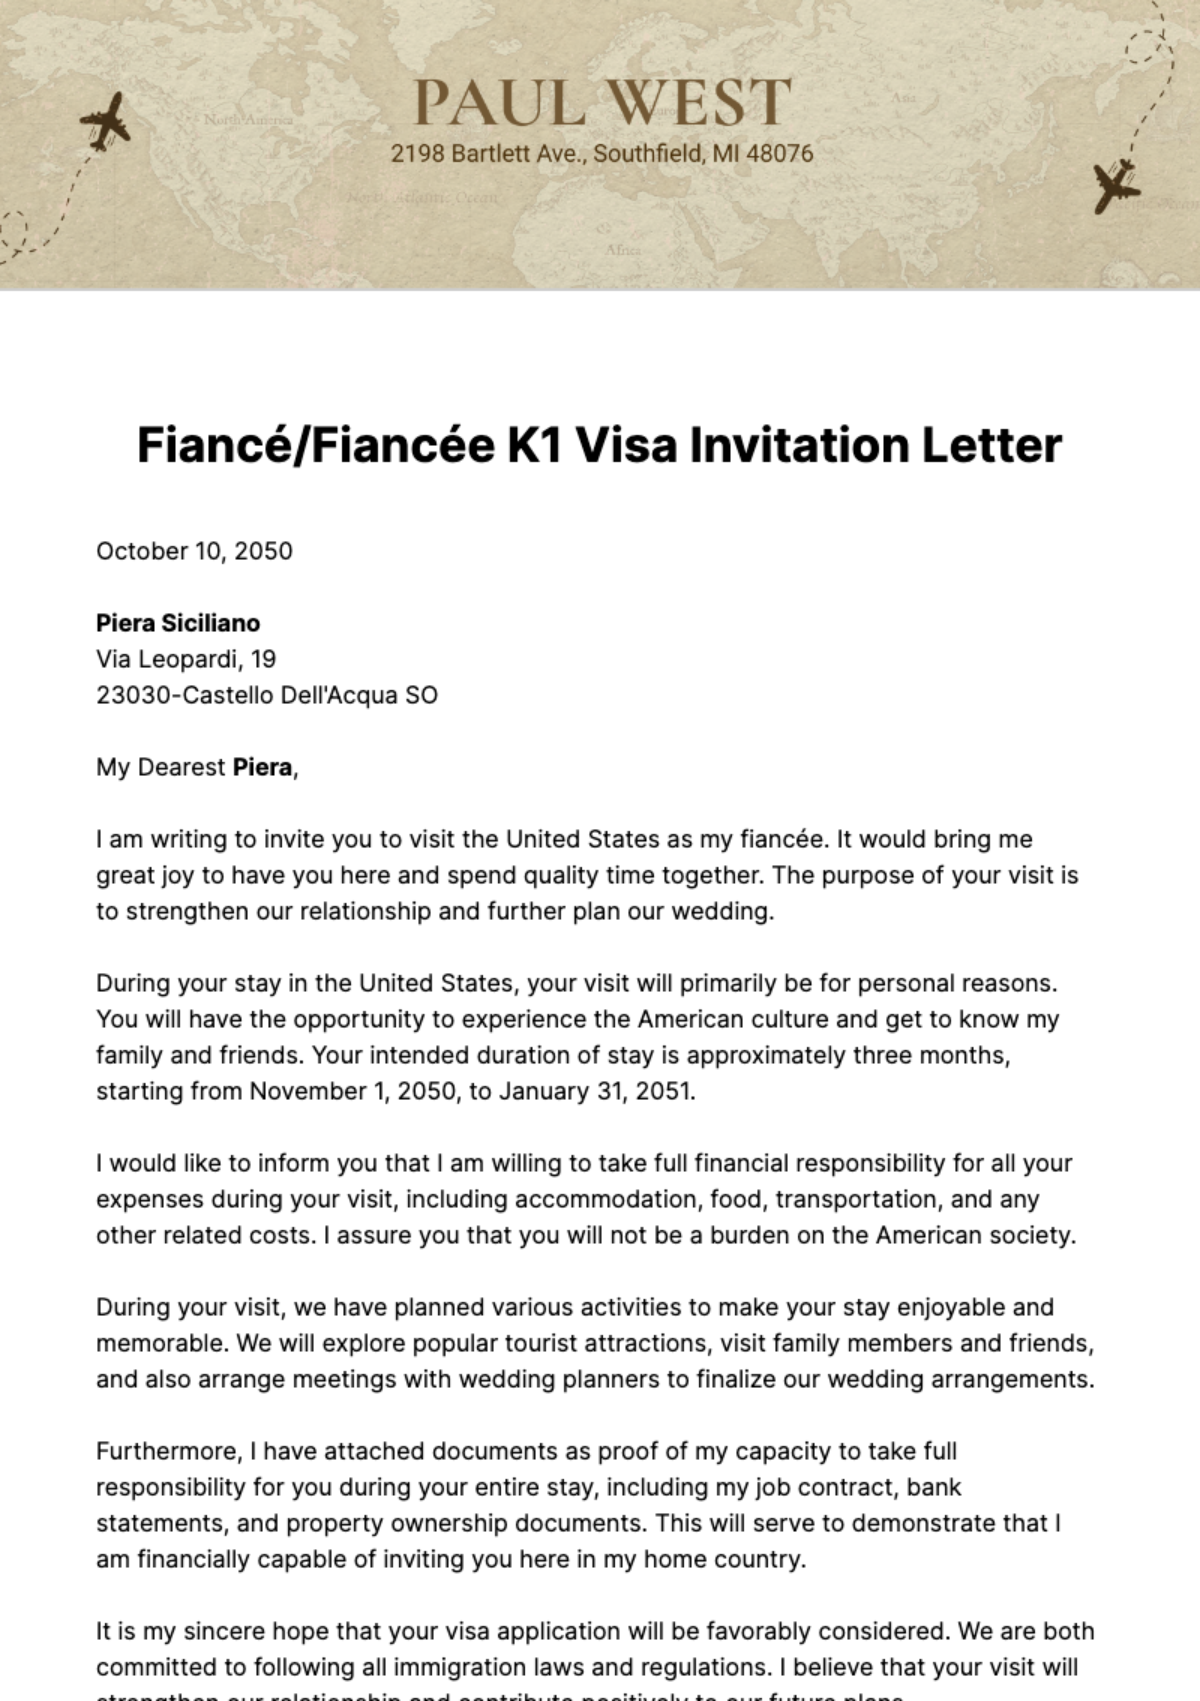 Fiancé/Fiancée K1 Visa Invitation Letter Template